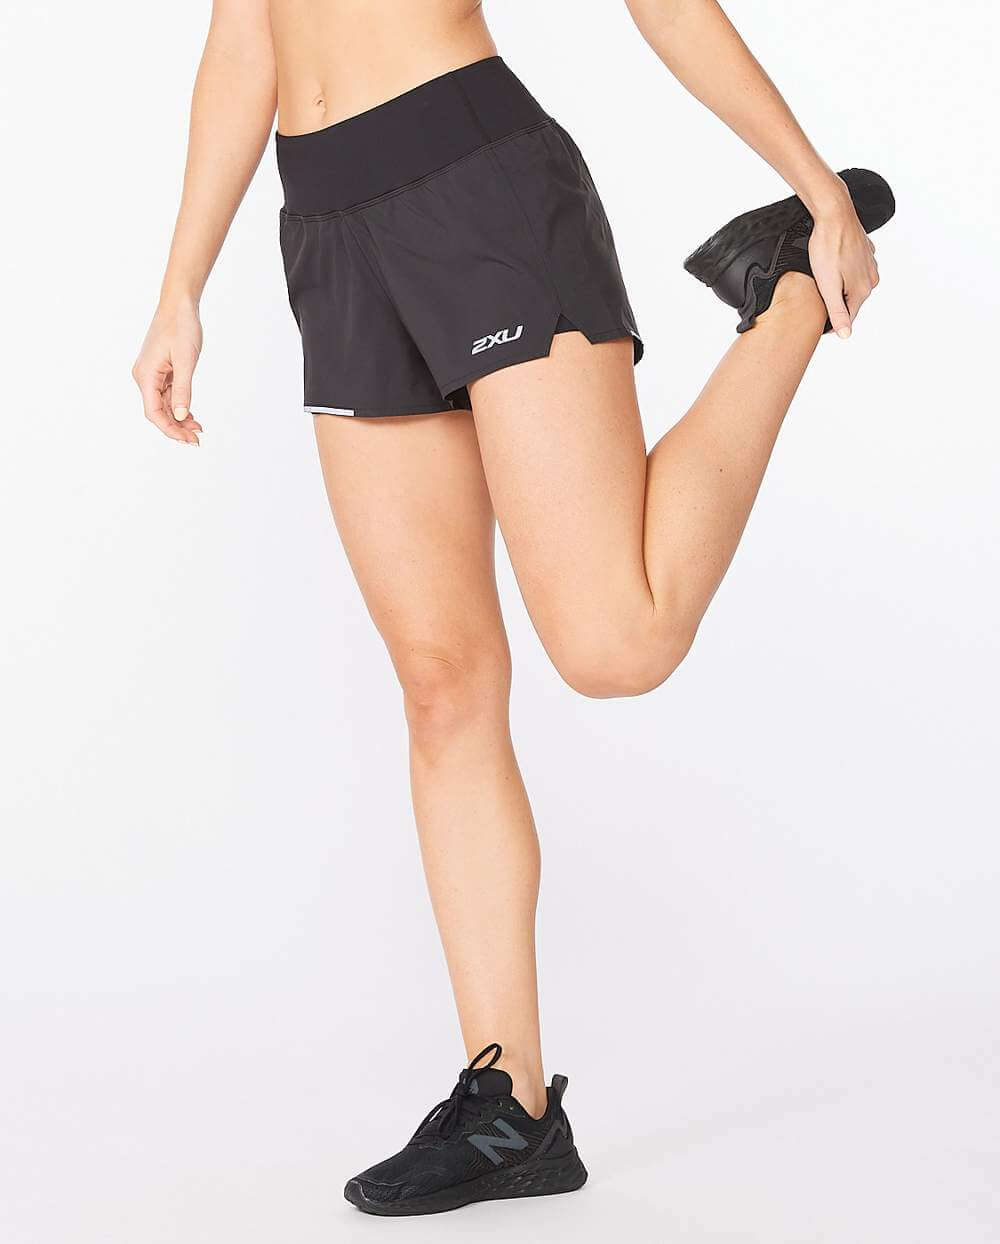 2XU Woman's Aero 2-in-1 3Inch Shorts Black/Silver